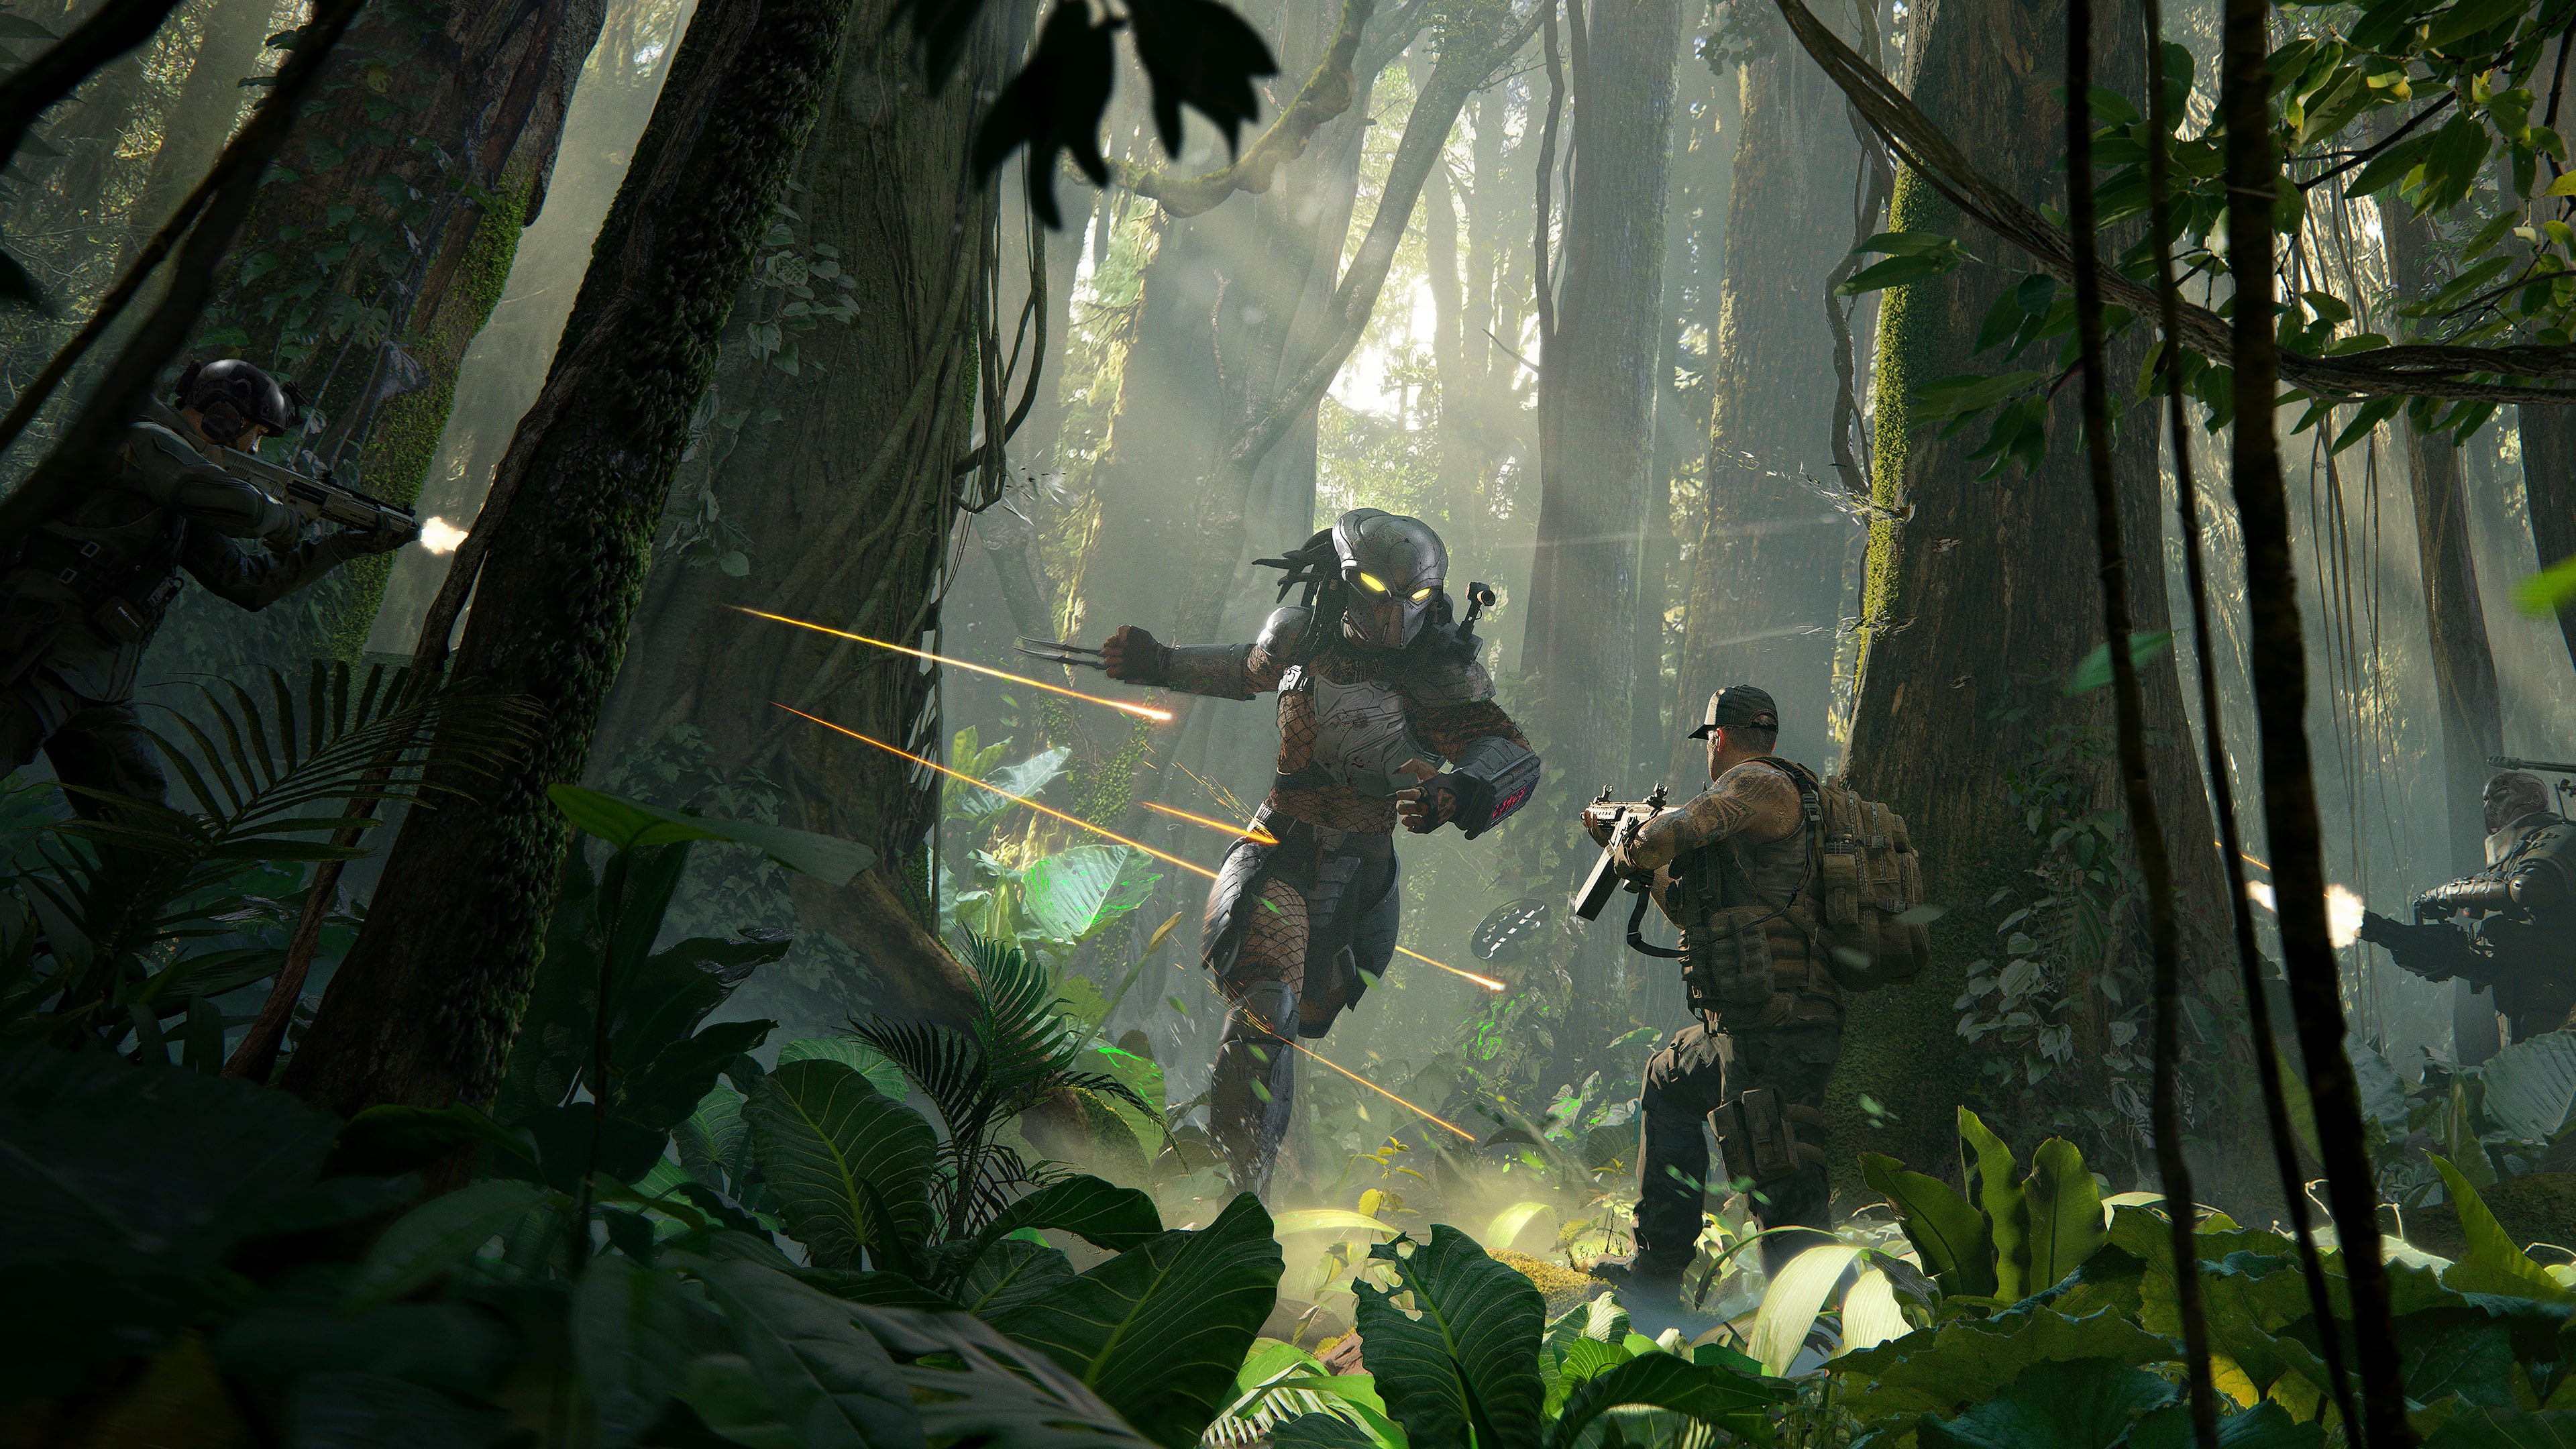 Predator: Hunting Grounds Edición Digital Deluxe